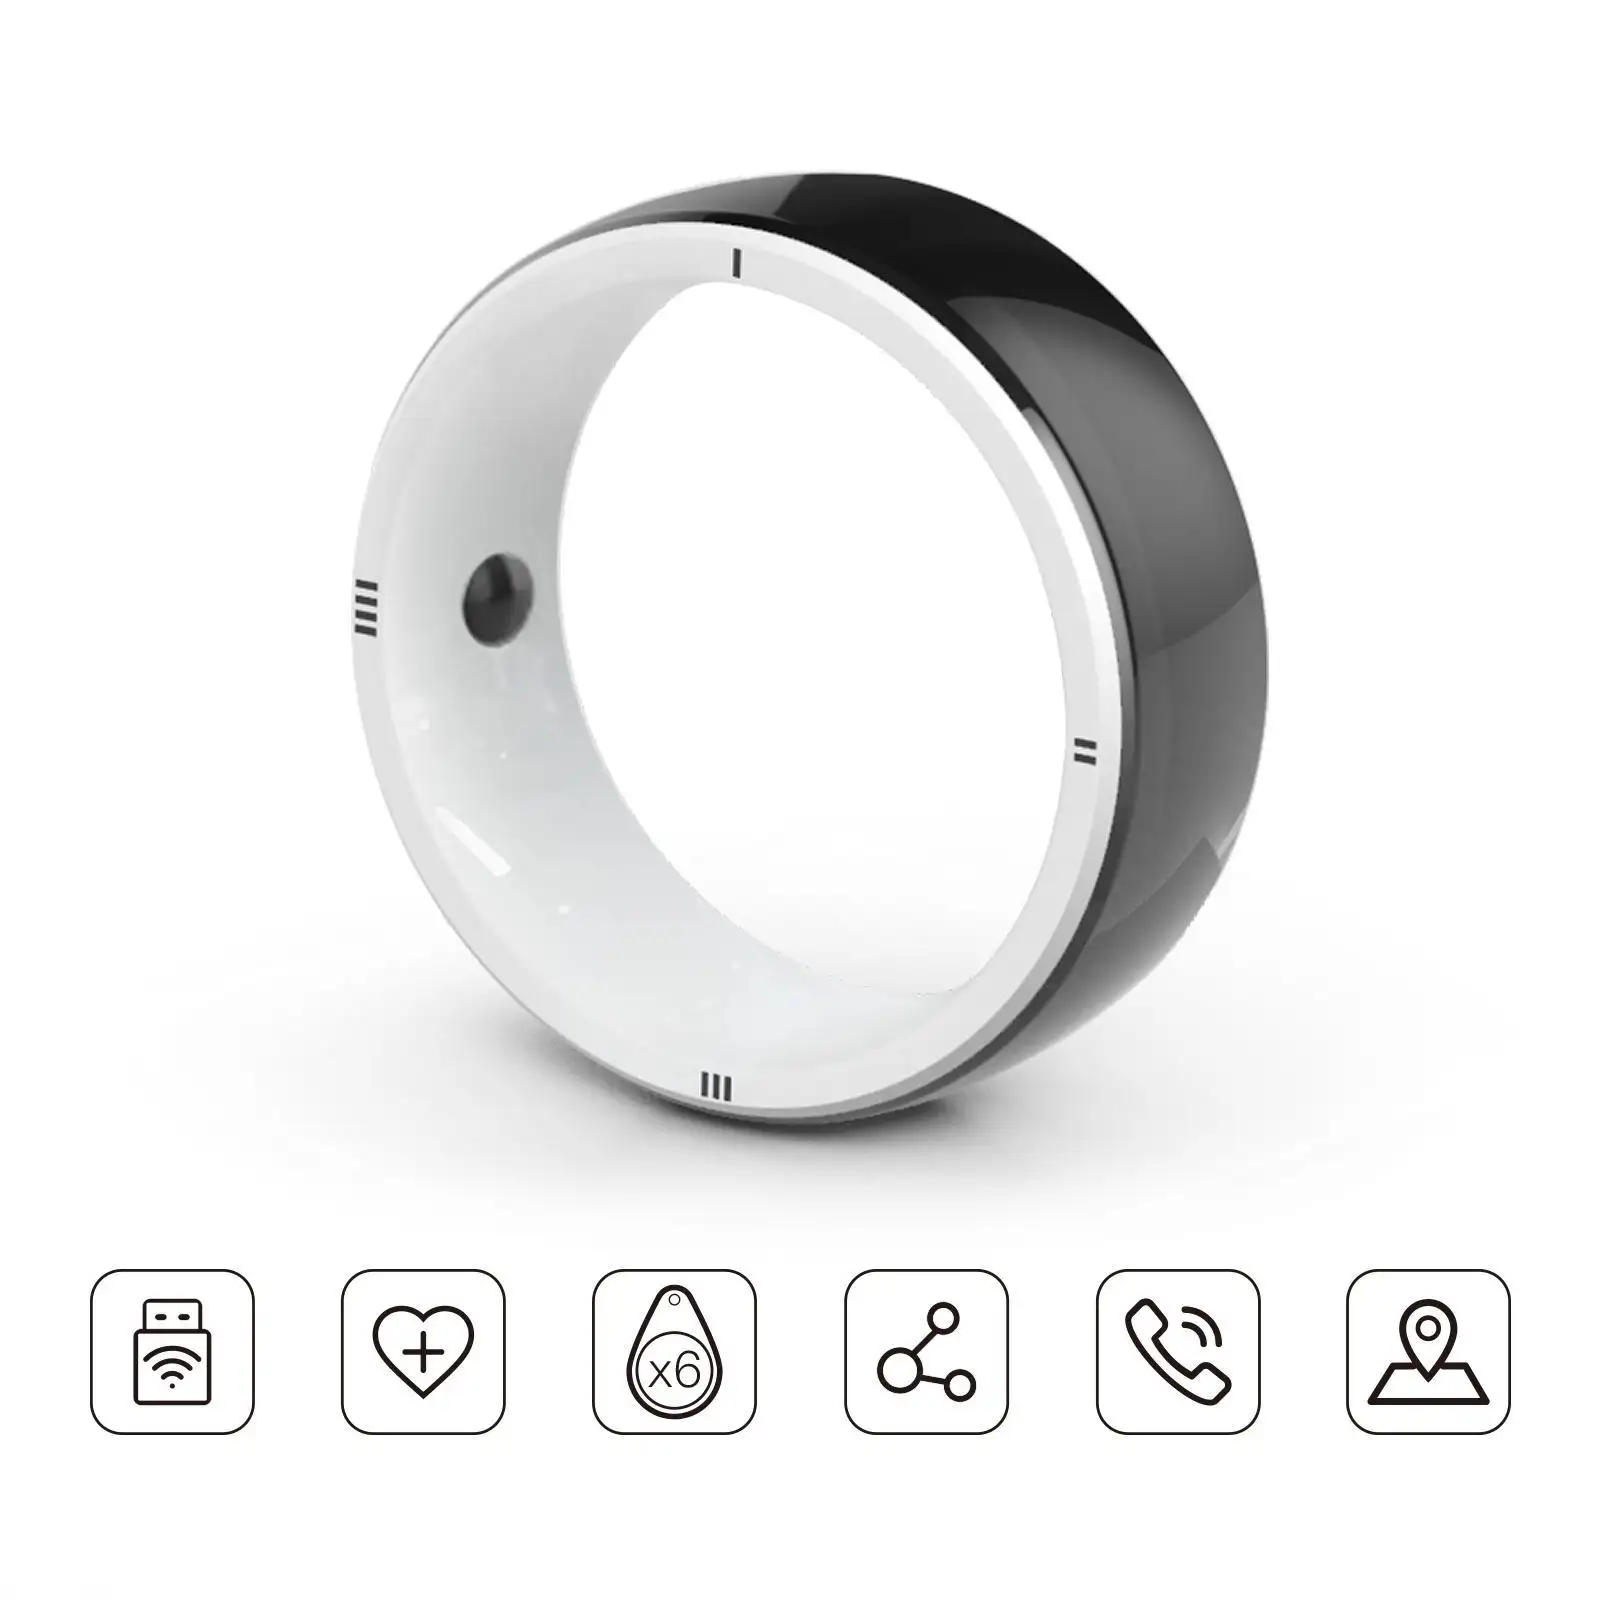 JAKCOM R5 cincin pintar baru cincin pintar bagus dari usb hub terbaik untuk pc kasar talkie video membawa saklar audio 1gbit cahaya makanan